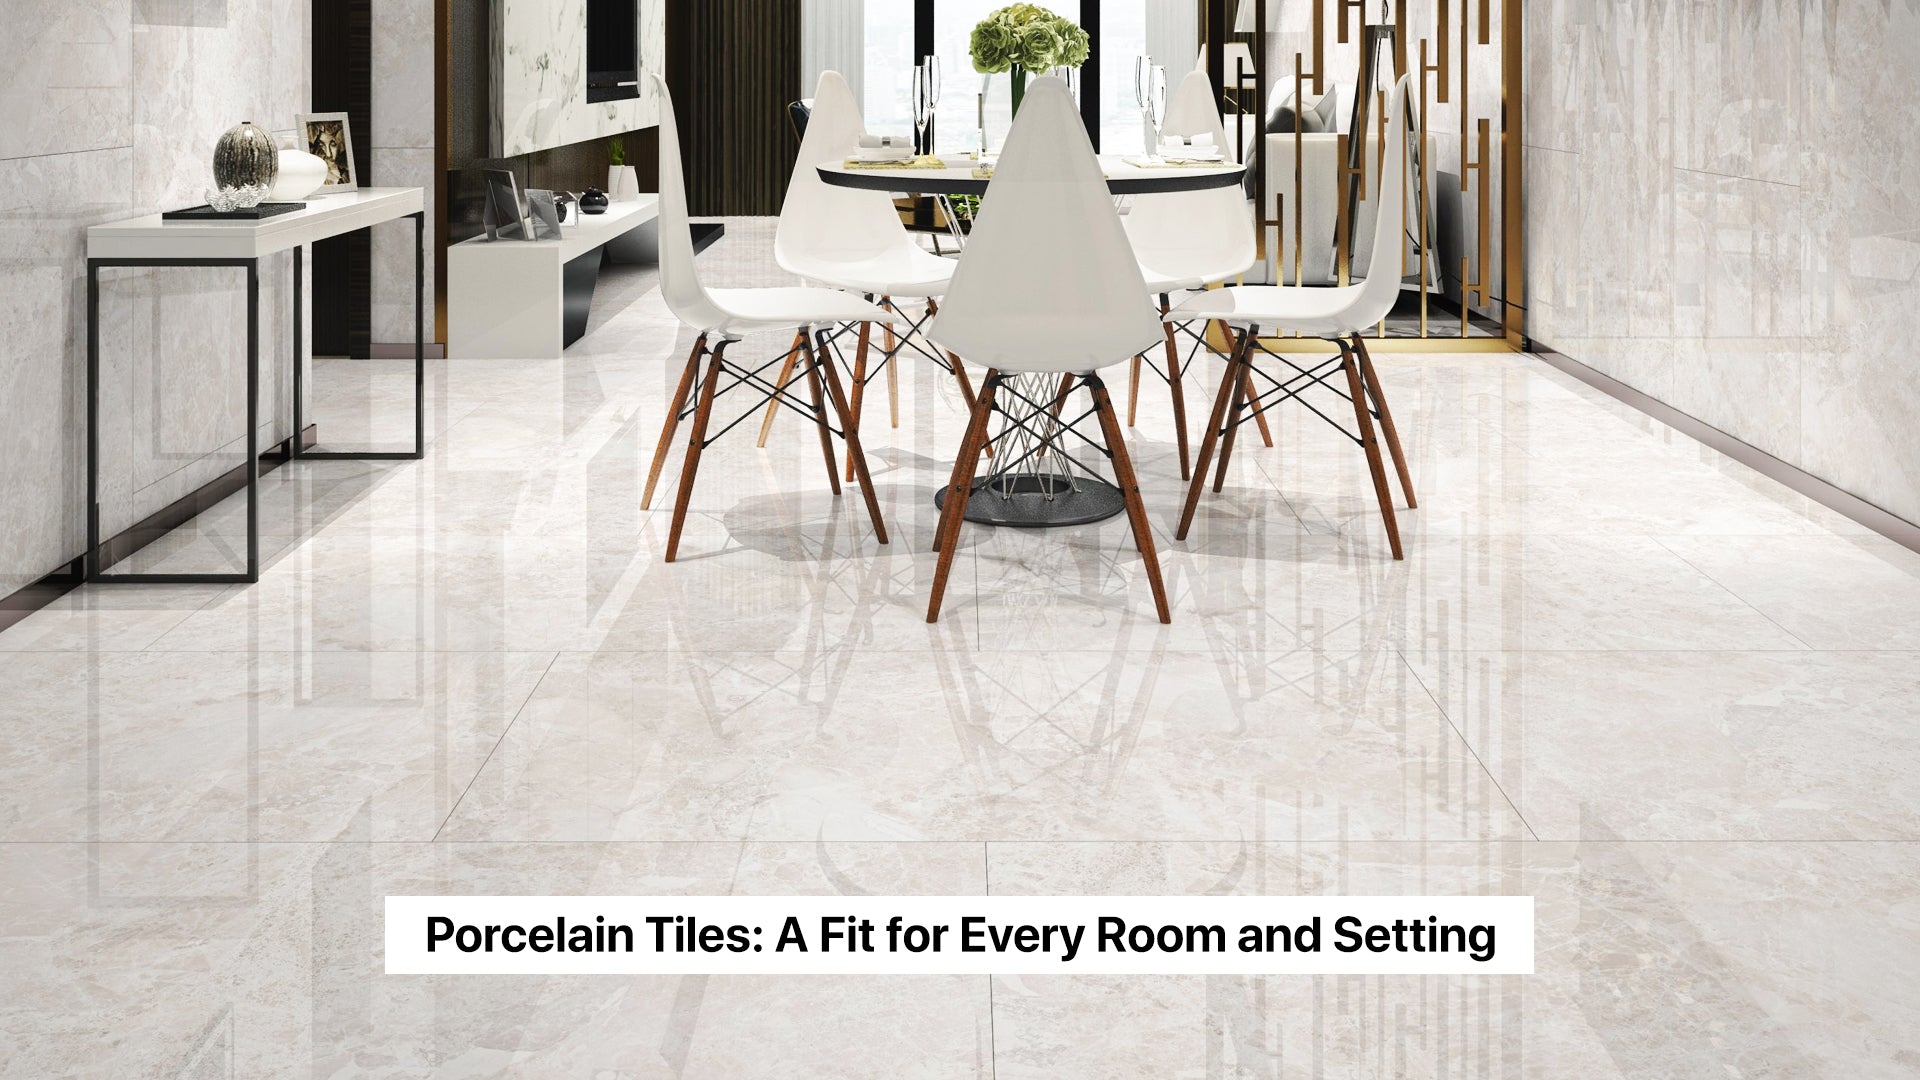 Discover The Versatility of Porcelain Tiles